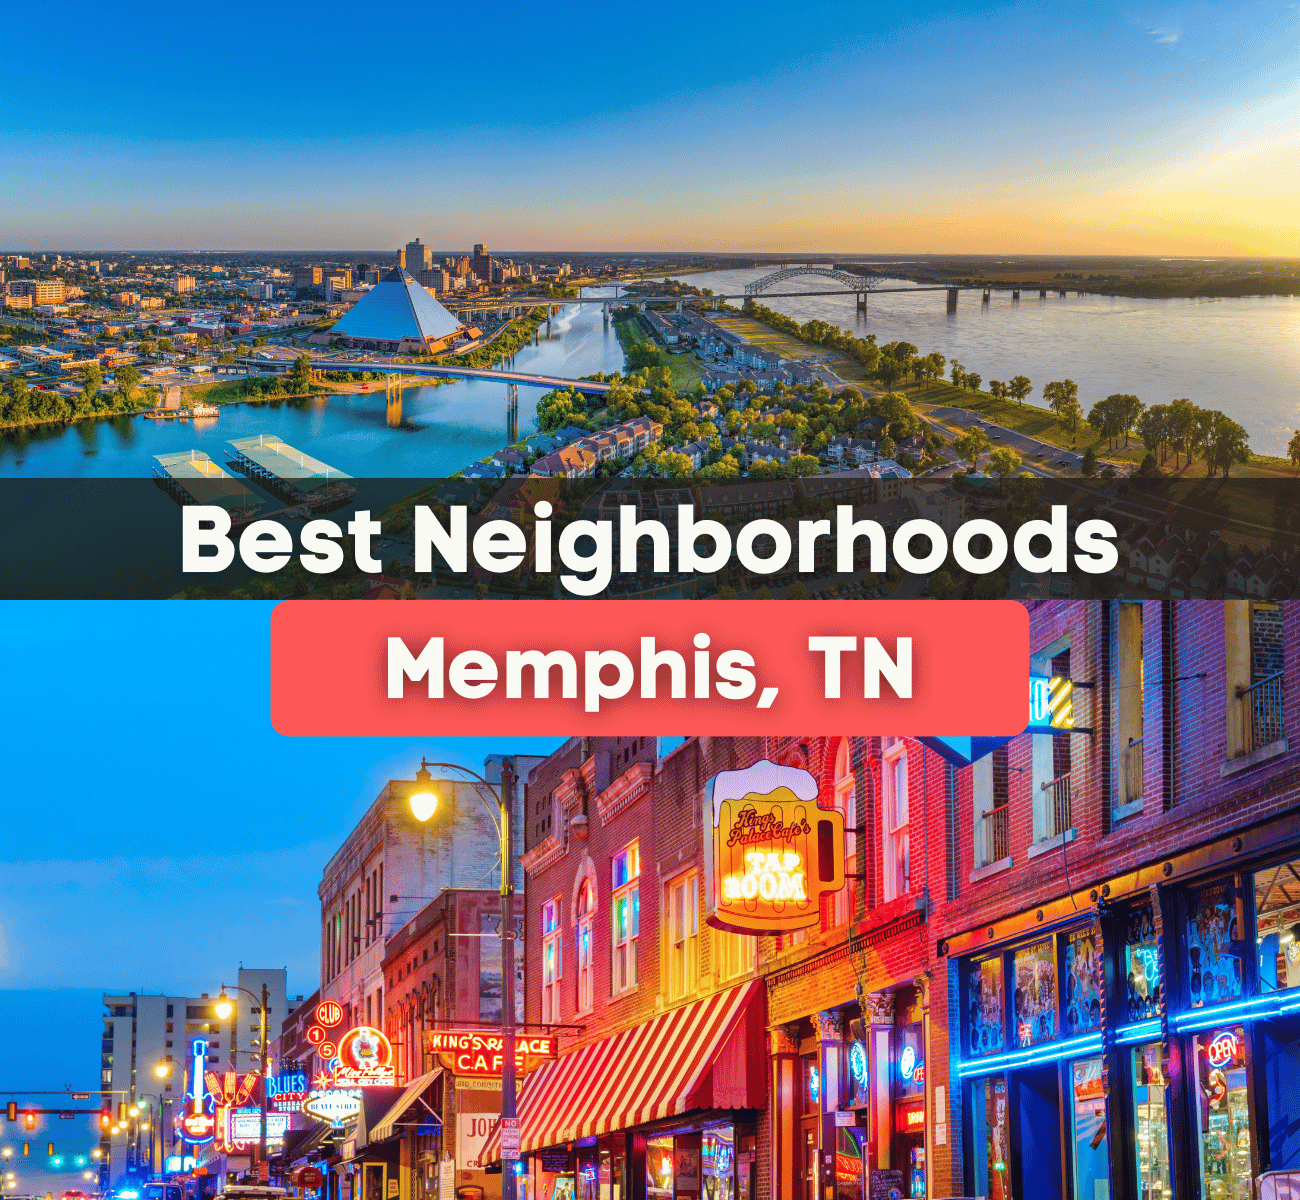 Best Neighborhoods Memphis, TN - Beale street and Memphis skyline